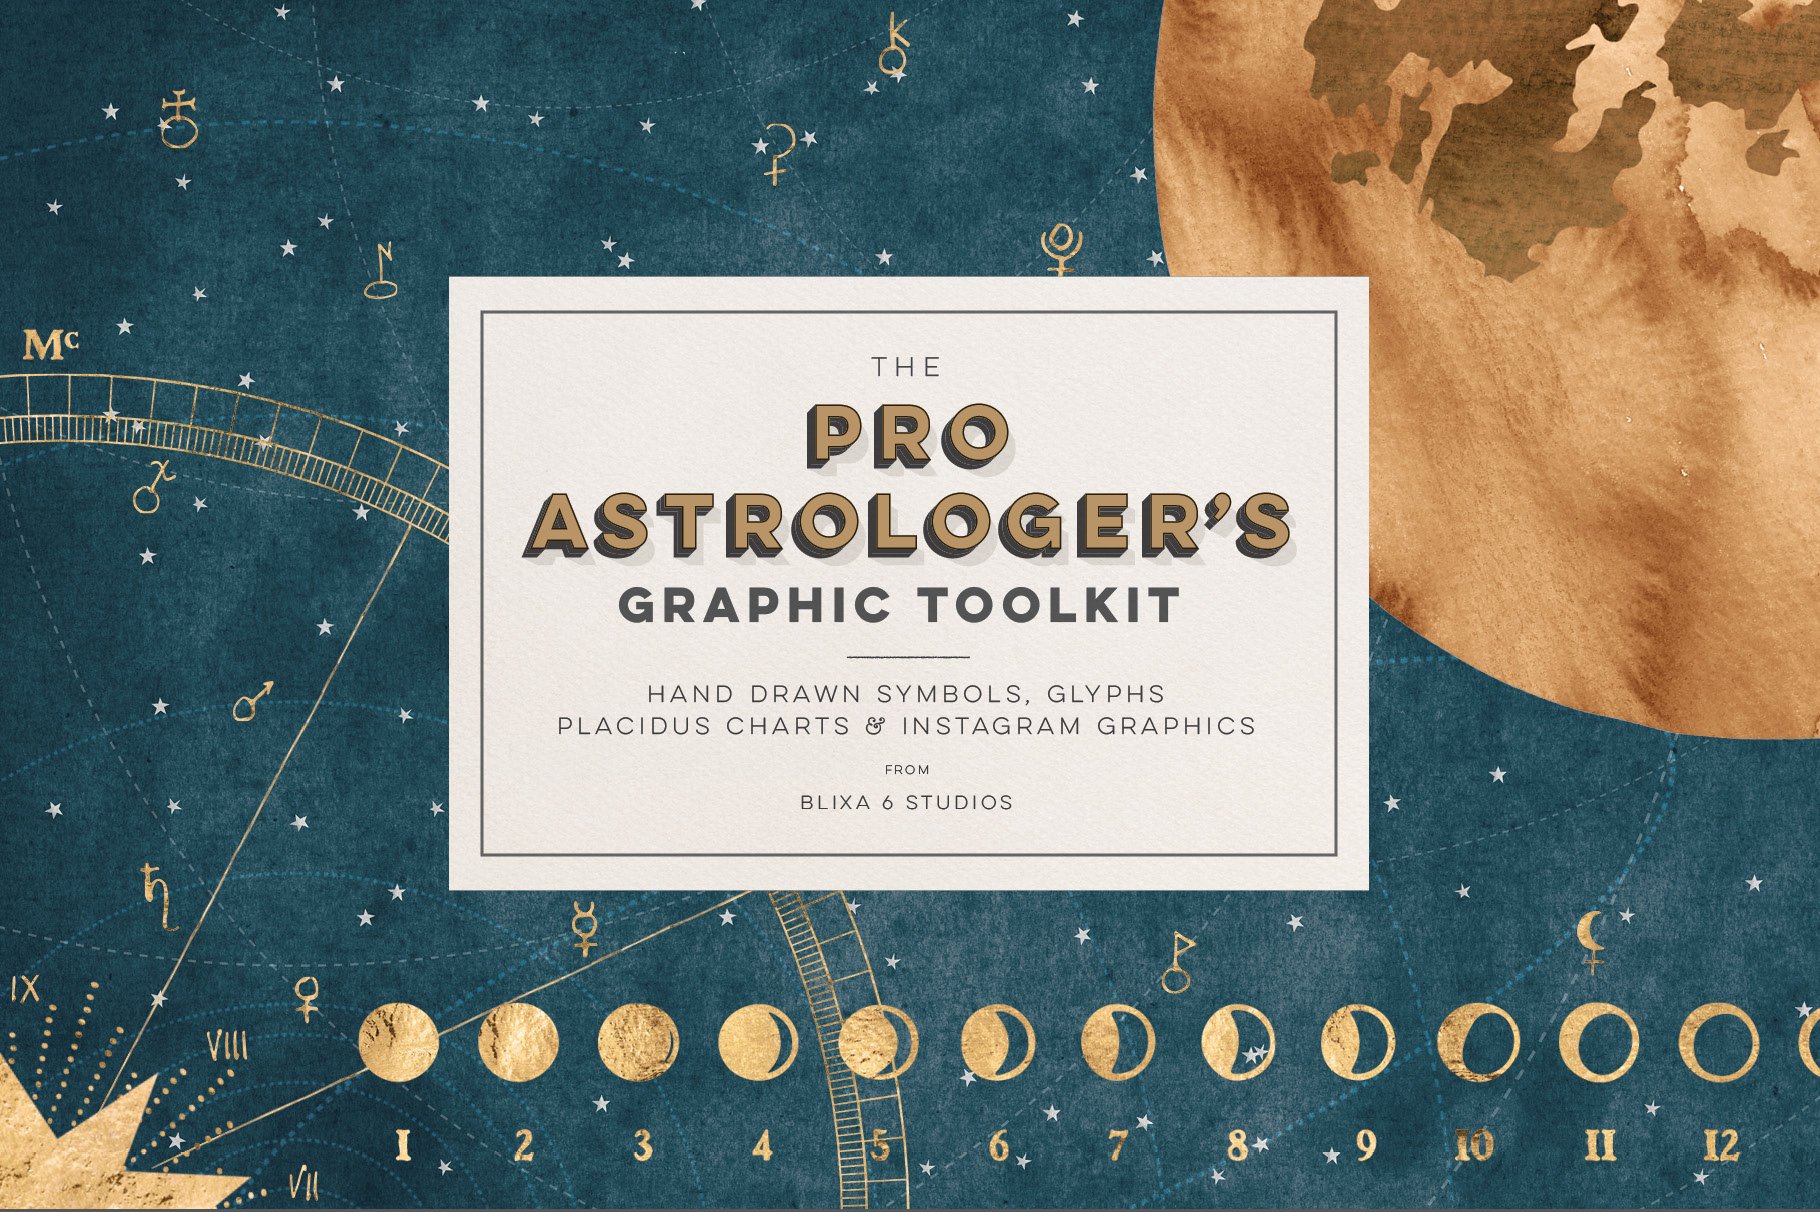 Pro Astrology Vector & Instagram Set cover image.